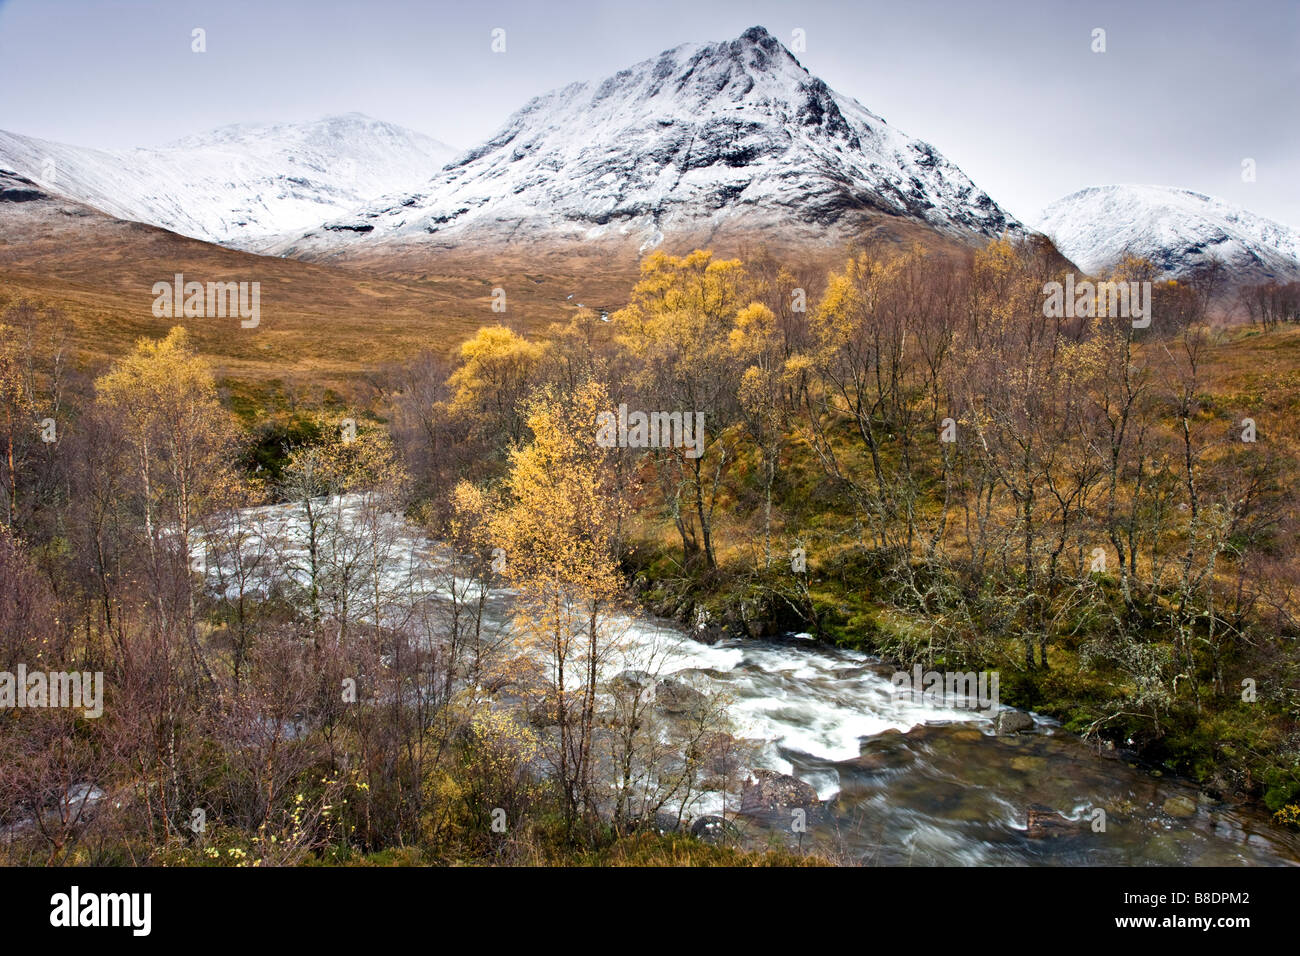 Scottish paisaje de montañas cubiertas de nieve cerca de Glen Coe. Foto de stock